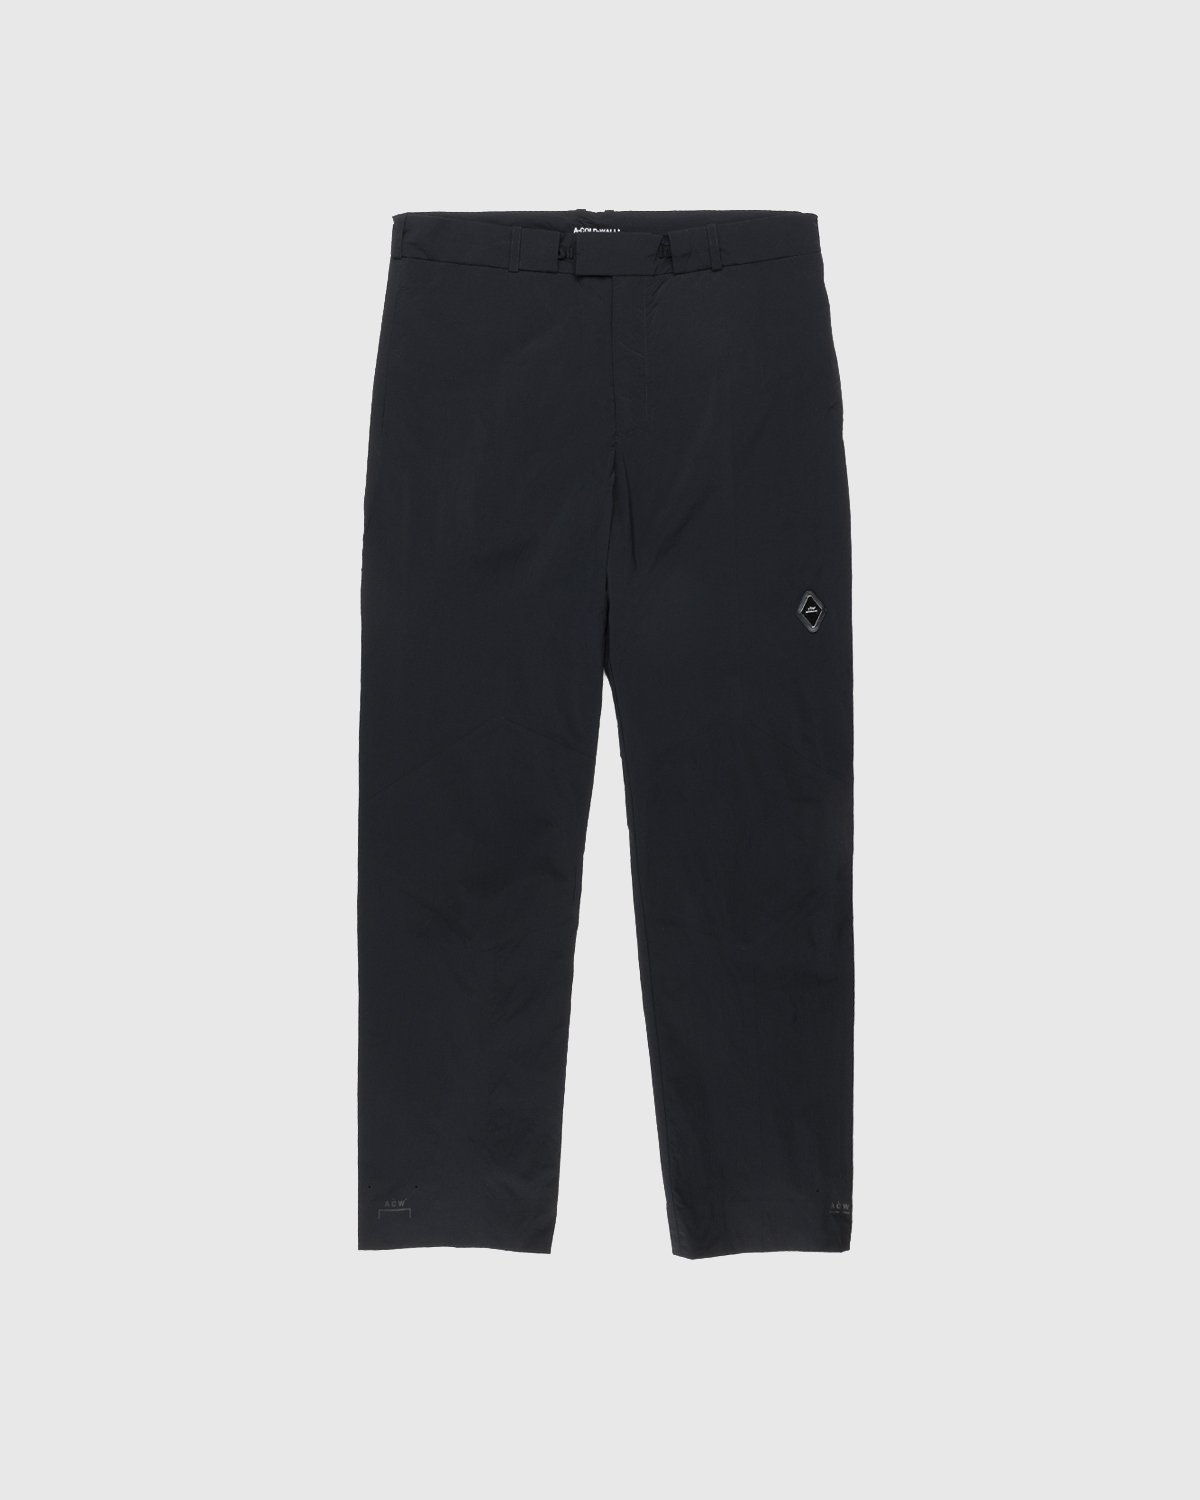 A-Cold-Wall* - Stealth Nylon Pants Black - Clothing - Black - Image 1